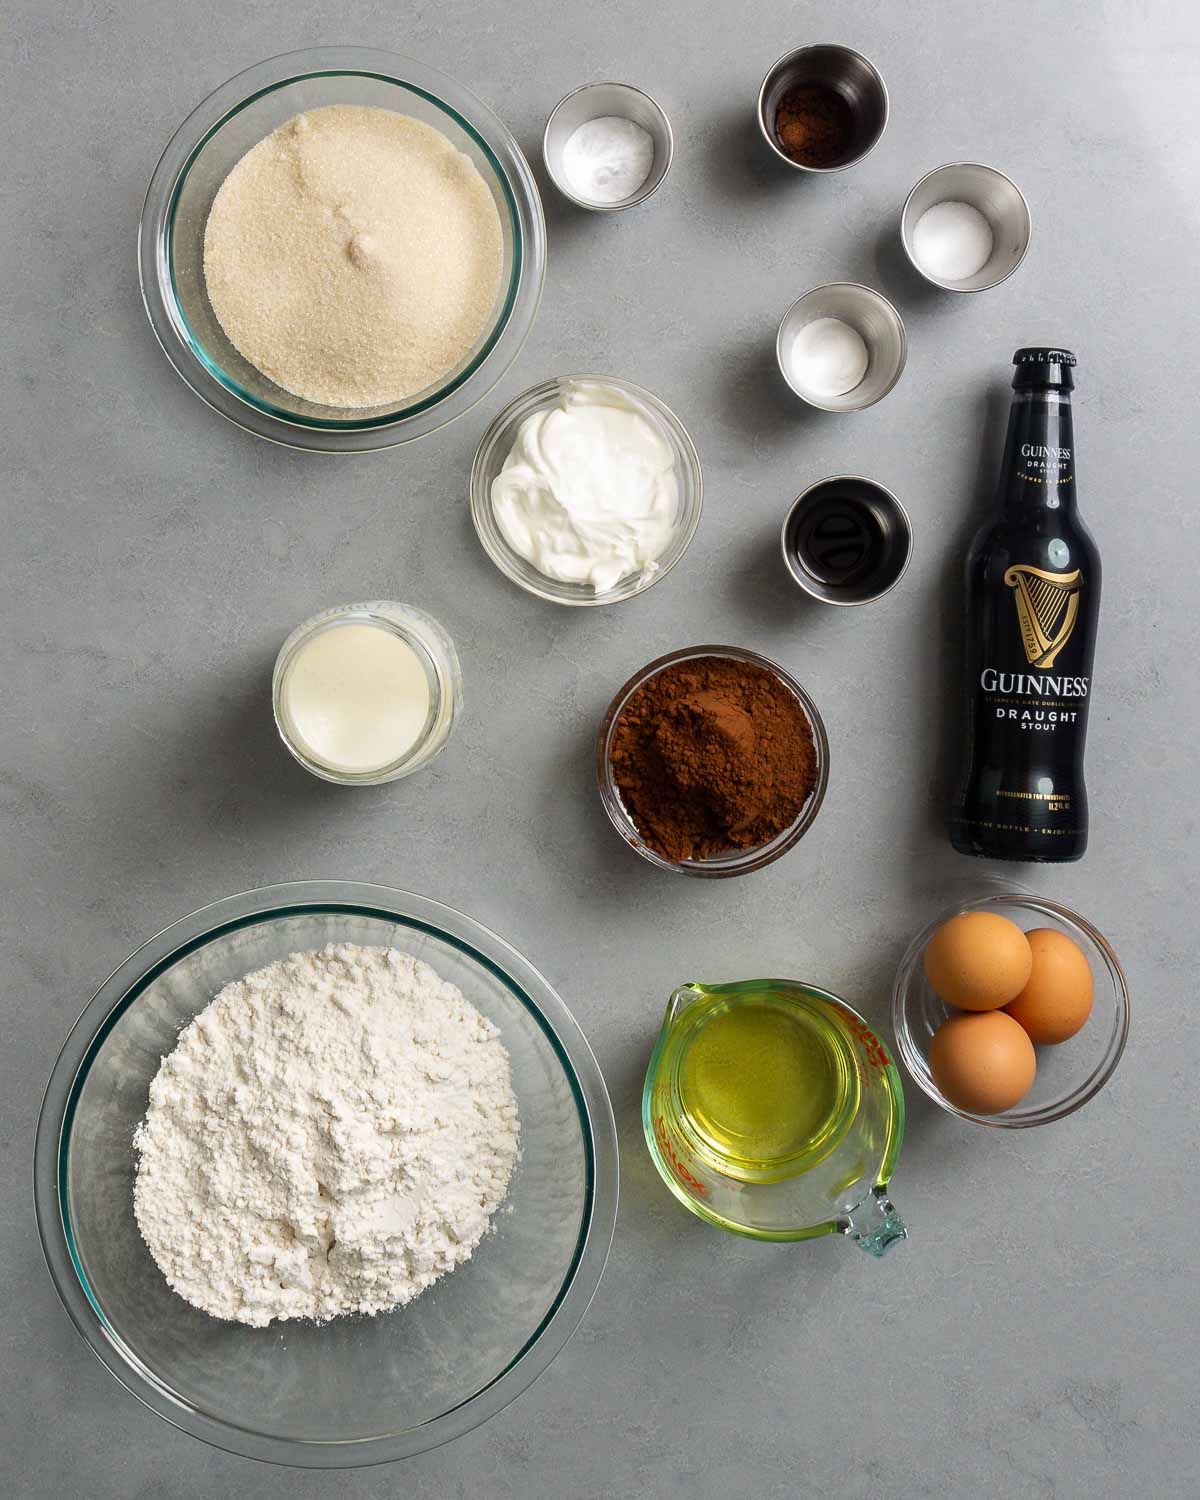 Ingredients shown: sugar, sour cream salt, baking powder, baking soda, espresso powder, vanilla, cocoa powder, Guinness, buttermilk, eggs, vegetable oil, and flour.